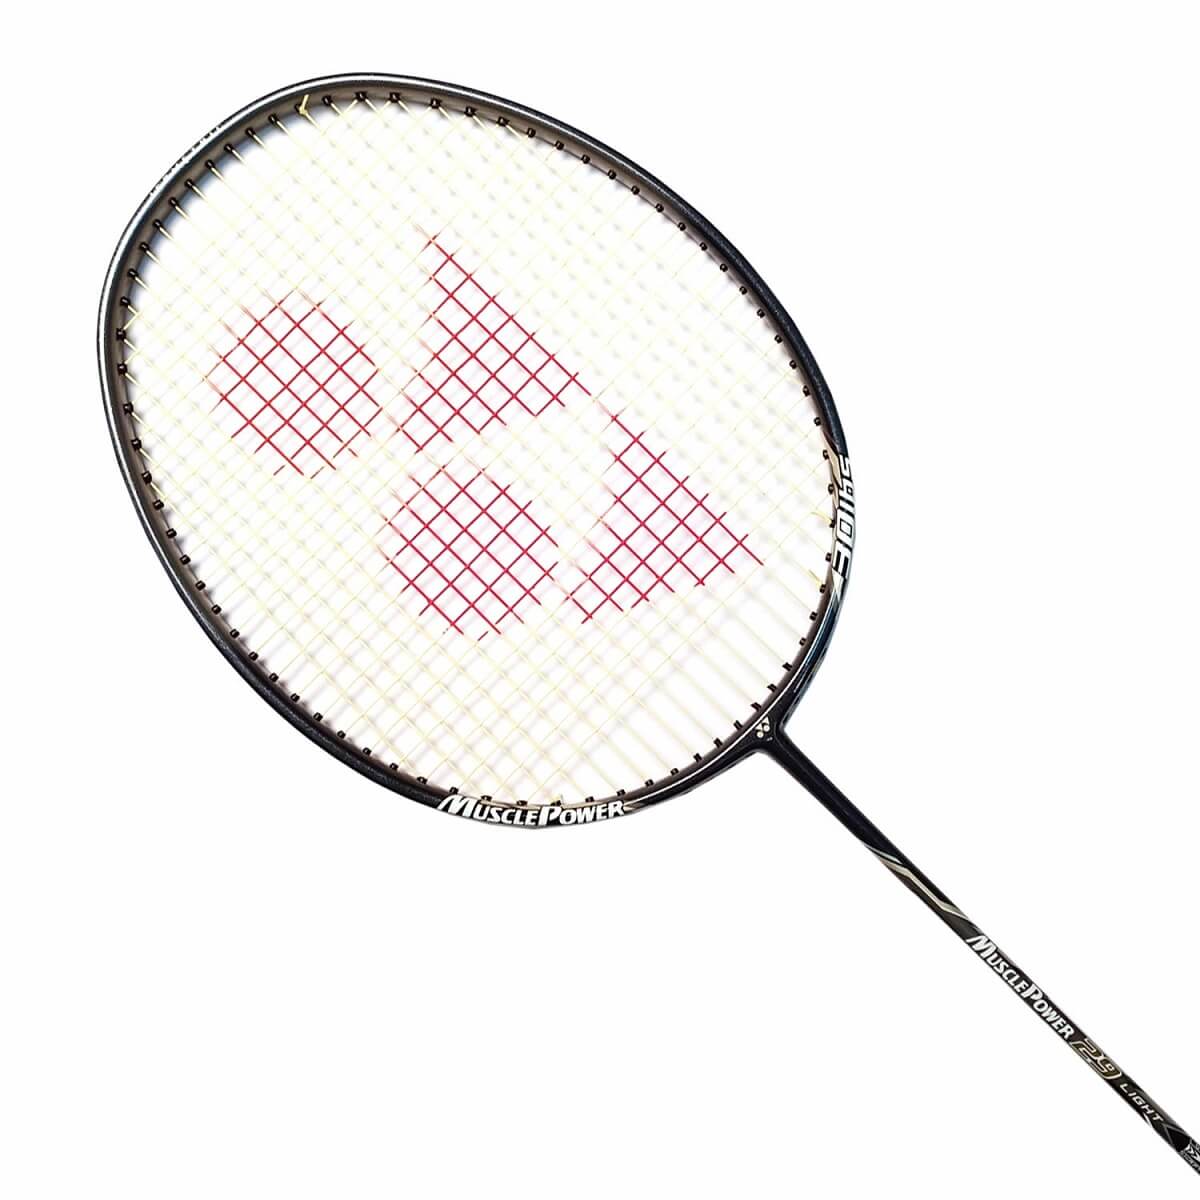 Yonex Muscle Power 29 Lite Badminton Racquet (Black)